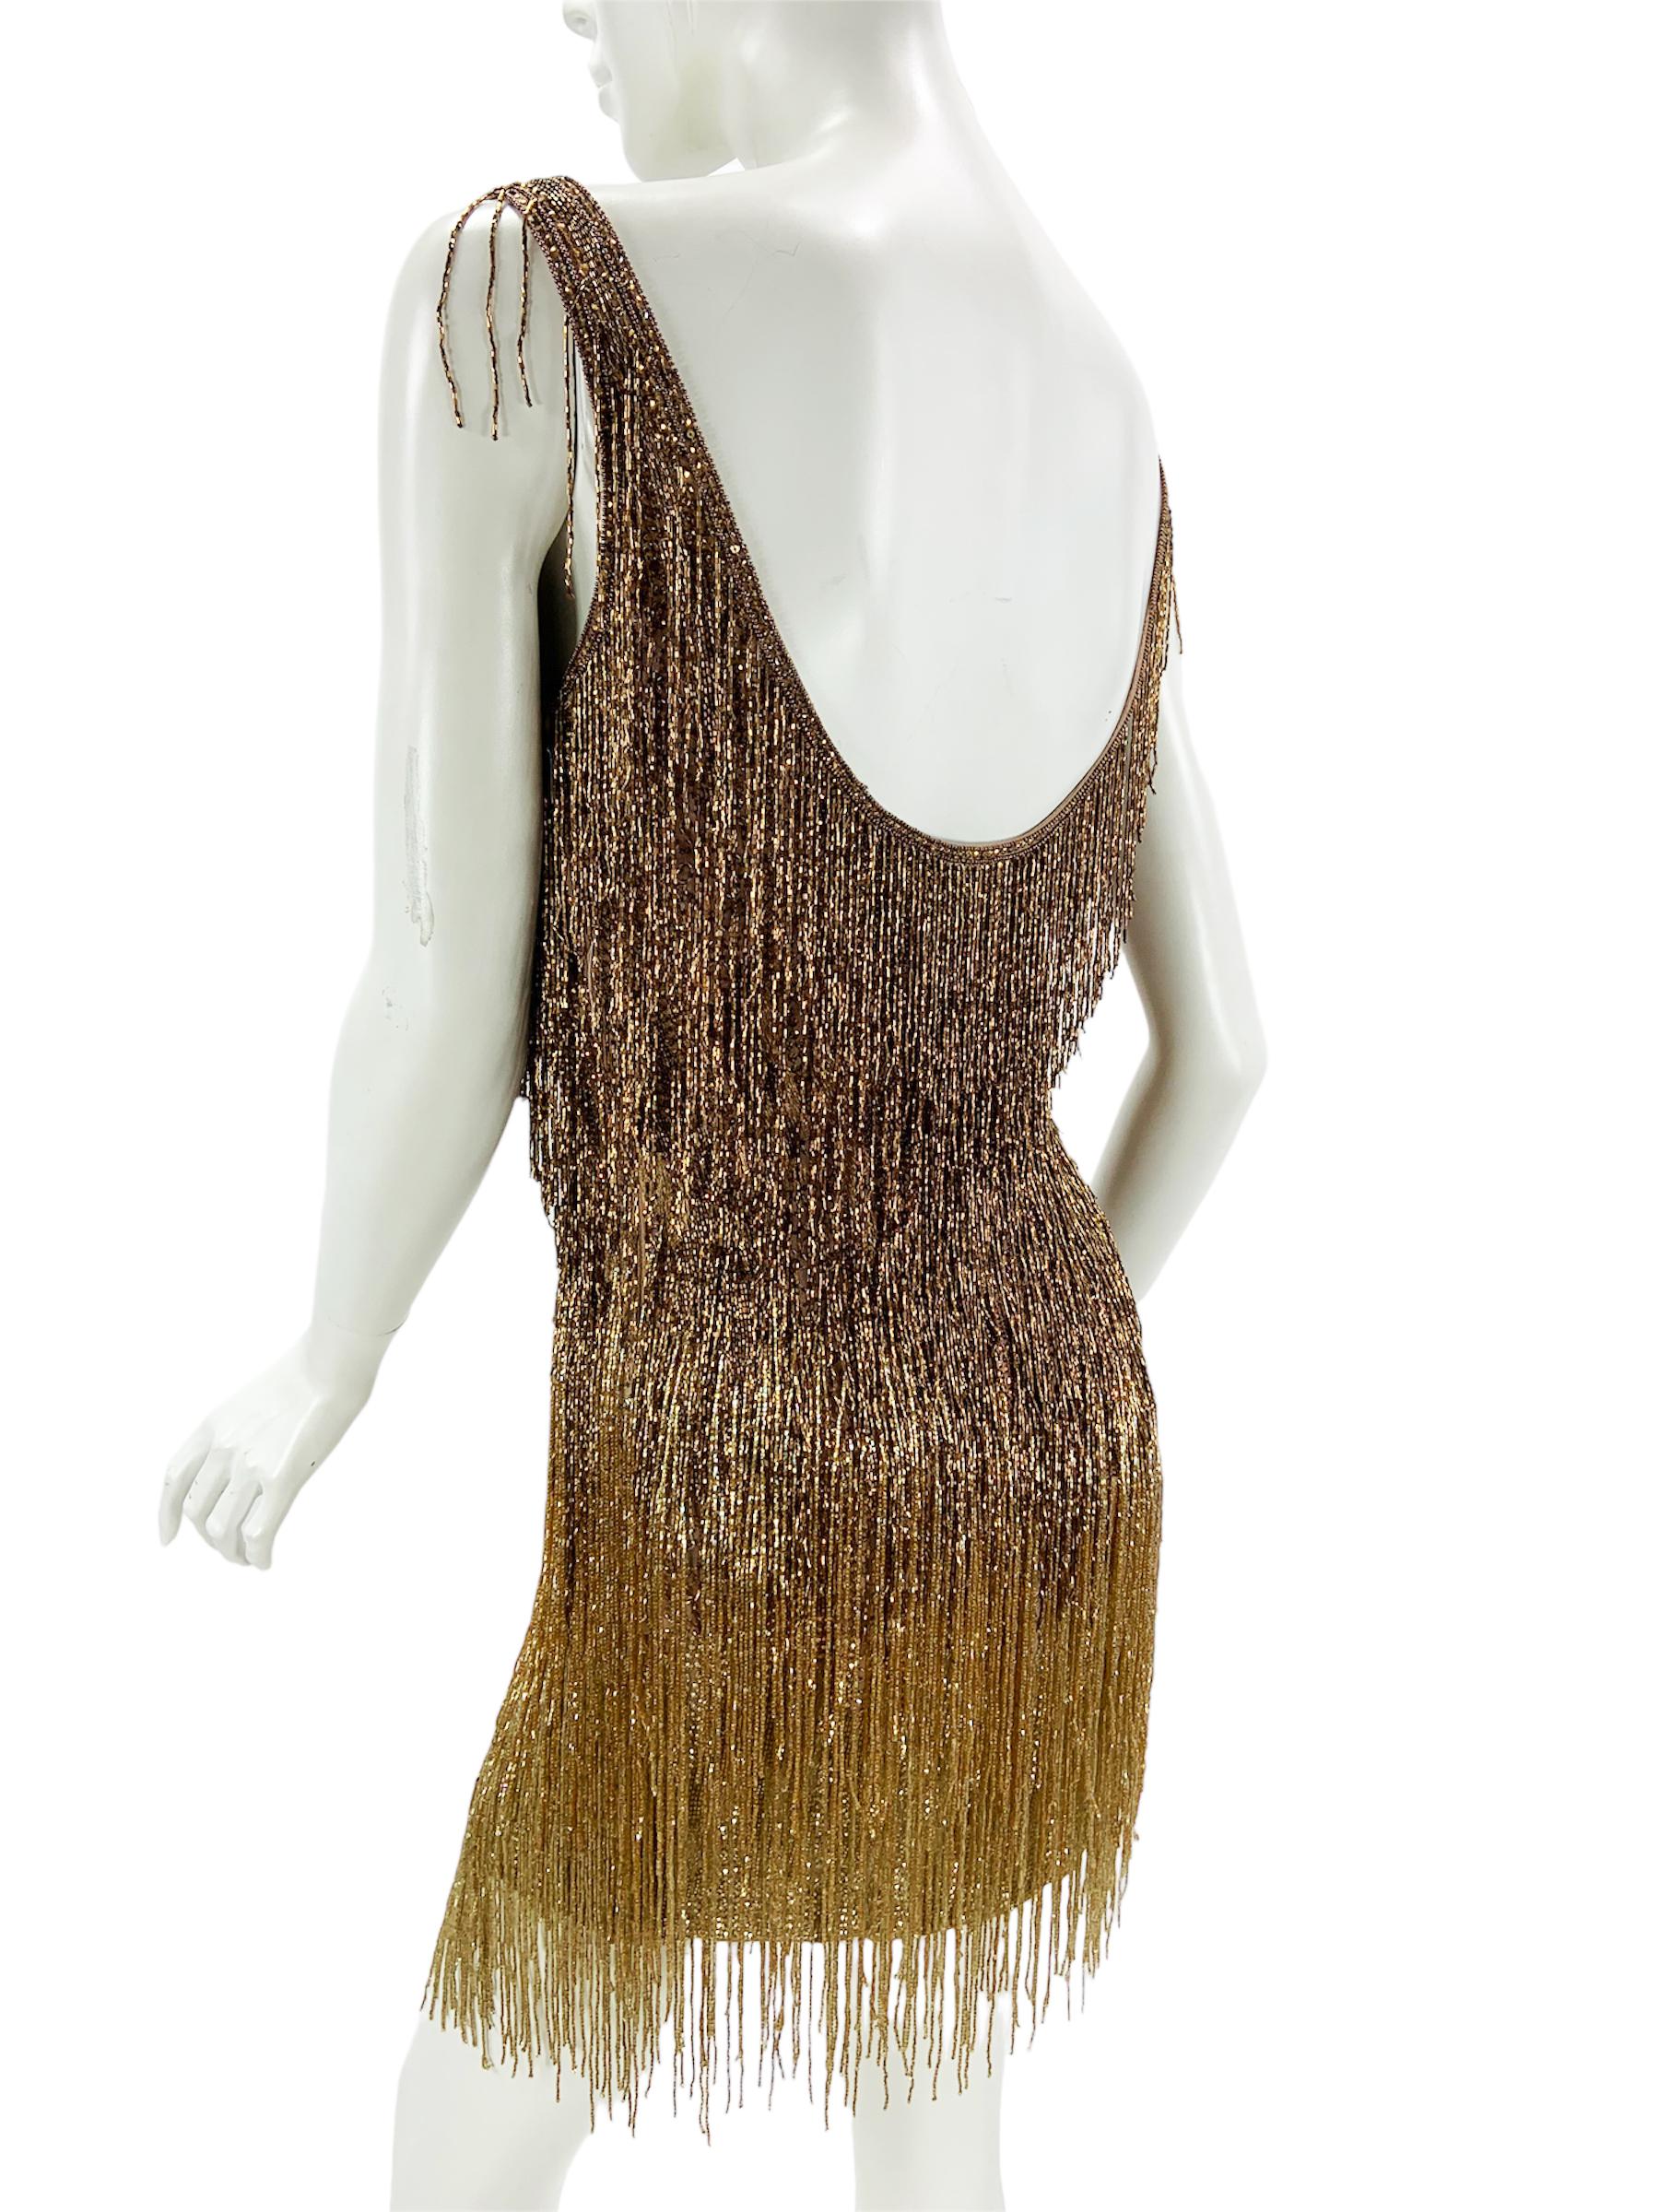 Iconic MUSEUM Roberto Cavalli Fringe Beaded Dress as seen on TAYLOR SWIFT It. 40 4